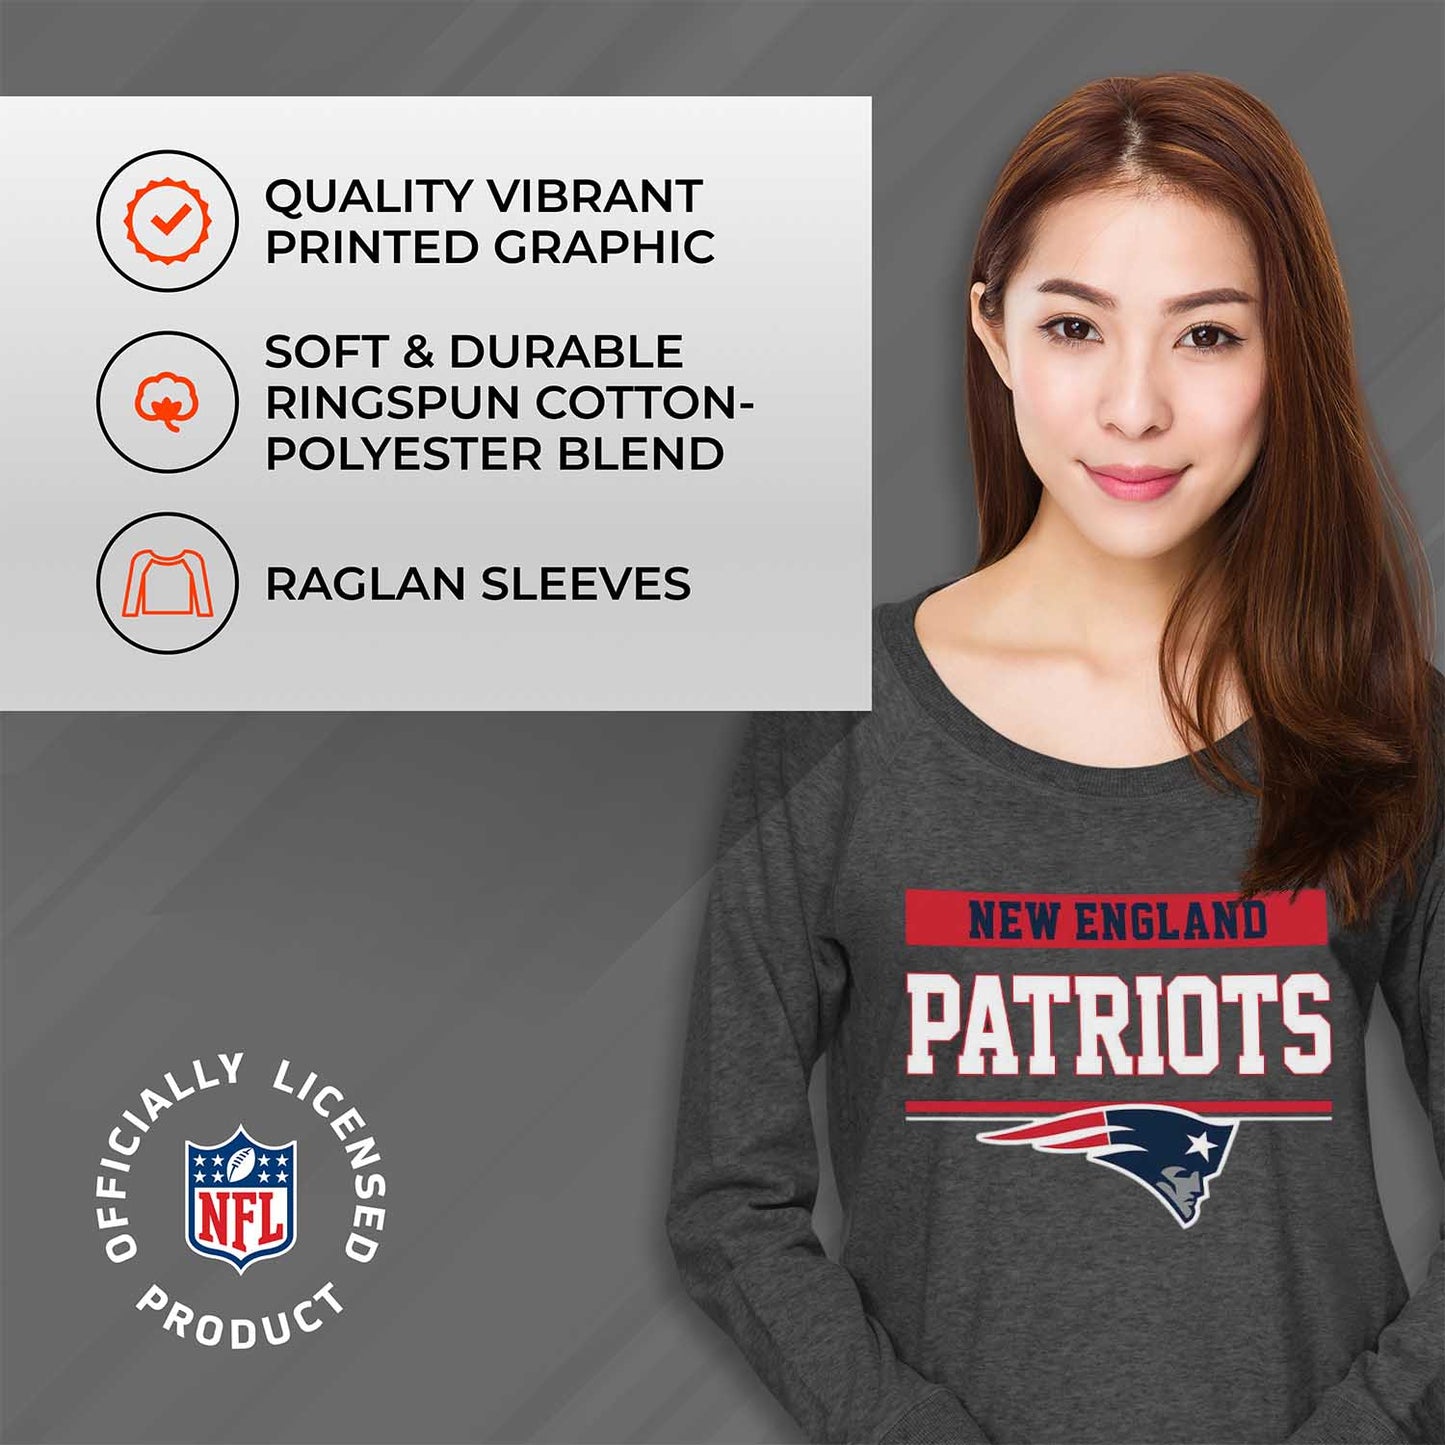 New England Patriots NFL Womens Charcoal Crew Neck Football Apparel - Charcoal